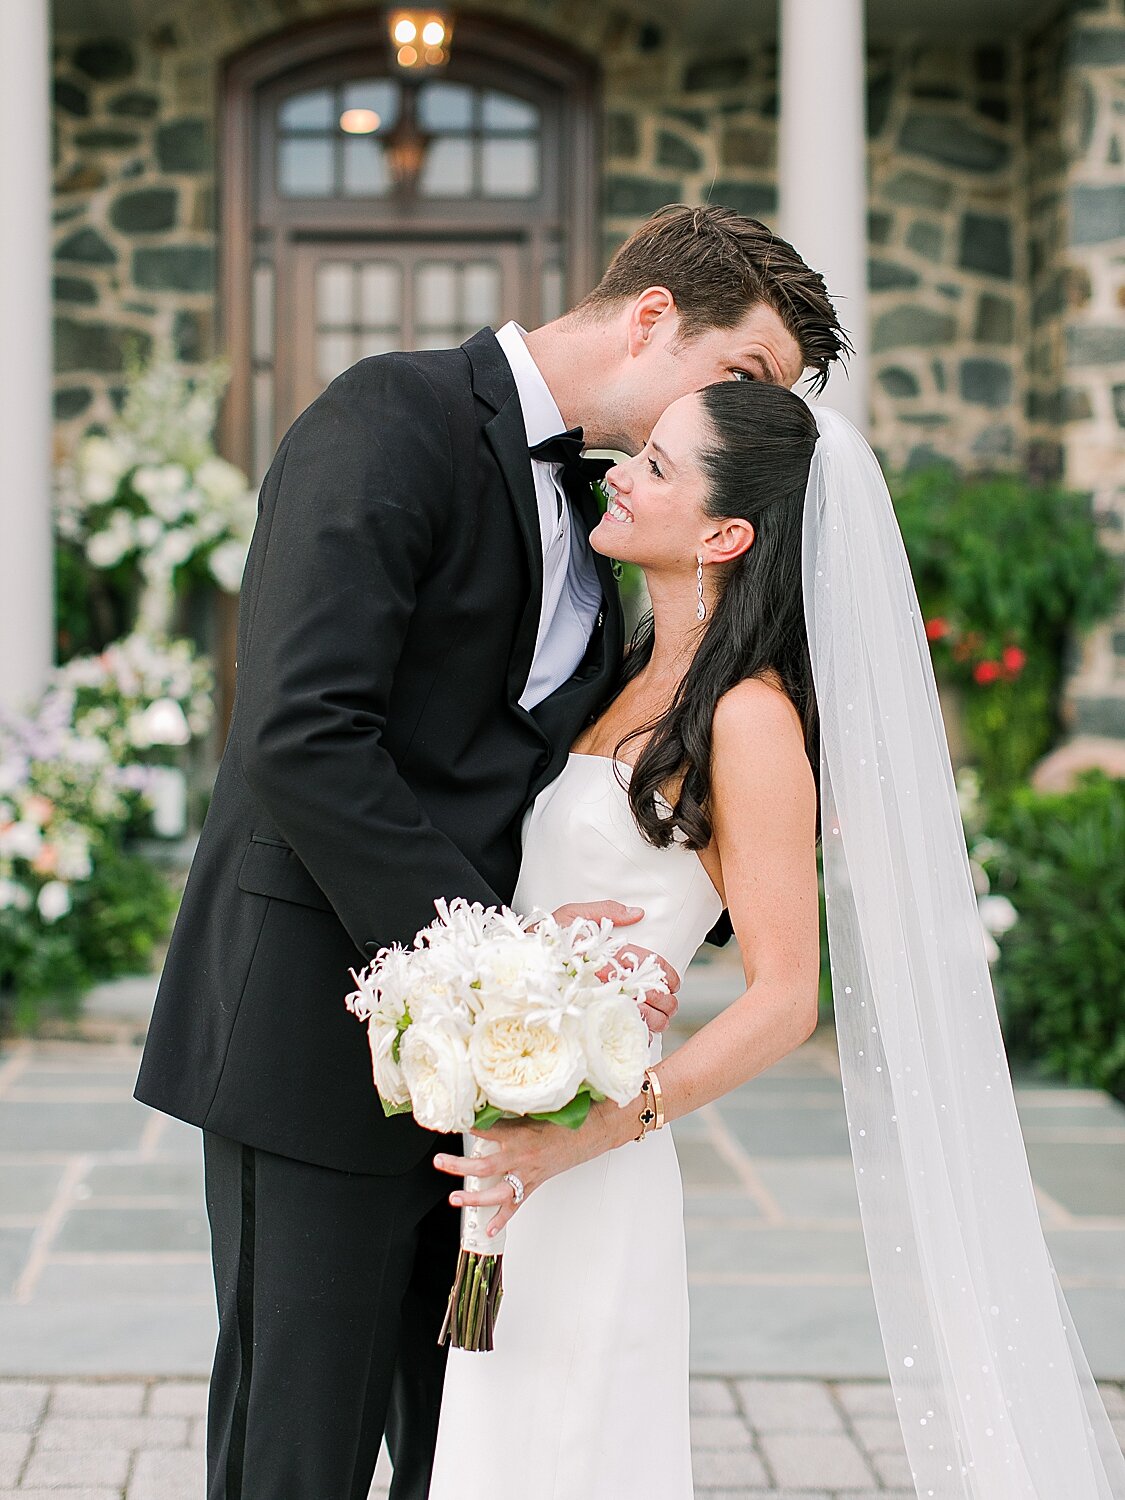 groom kisses bride on cheek | Stylish Private Home Wedding Inspiration | Asher Gardner Photography